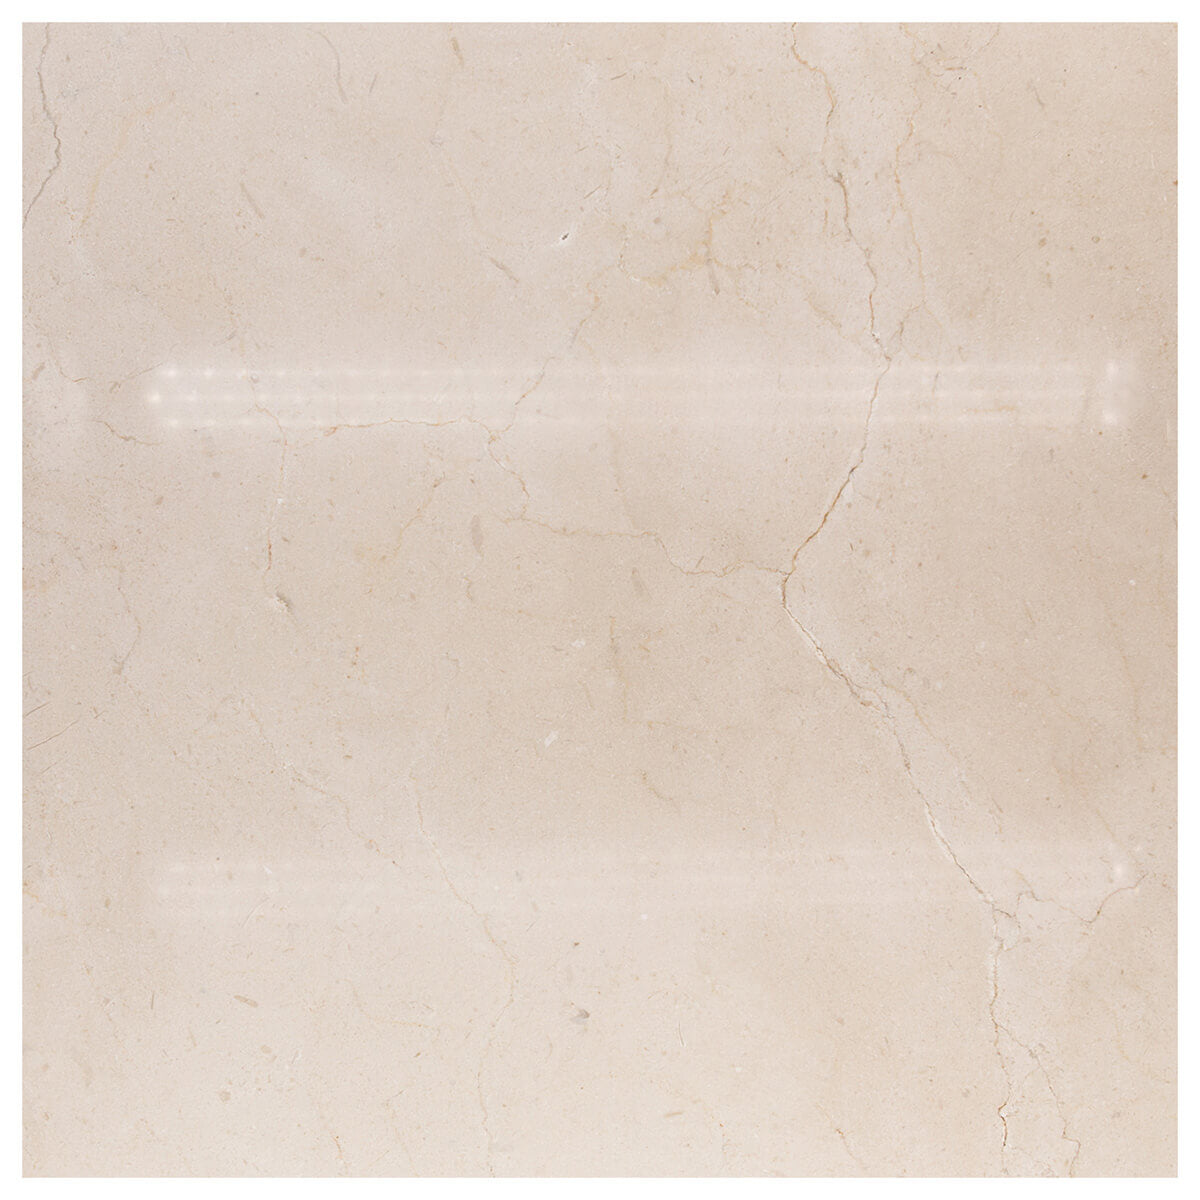 haussmann crema marfil limestone square natural stone field tile 18x18 polished